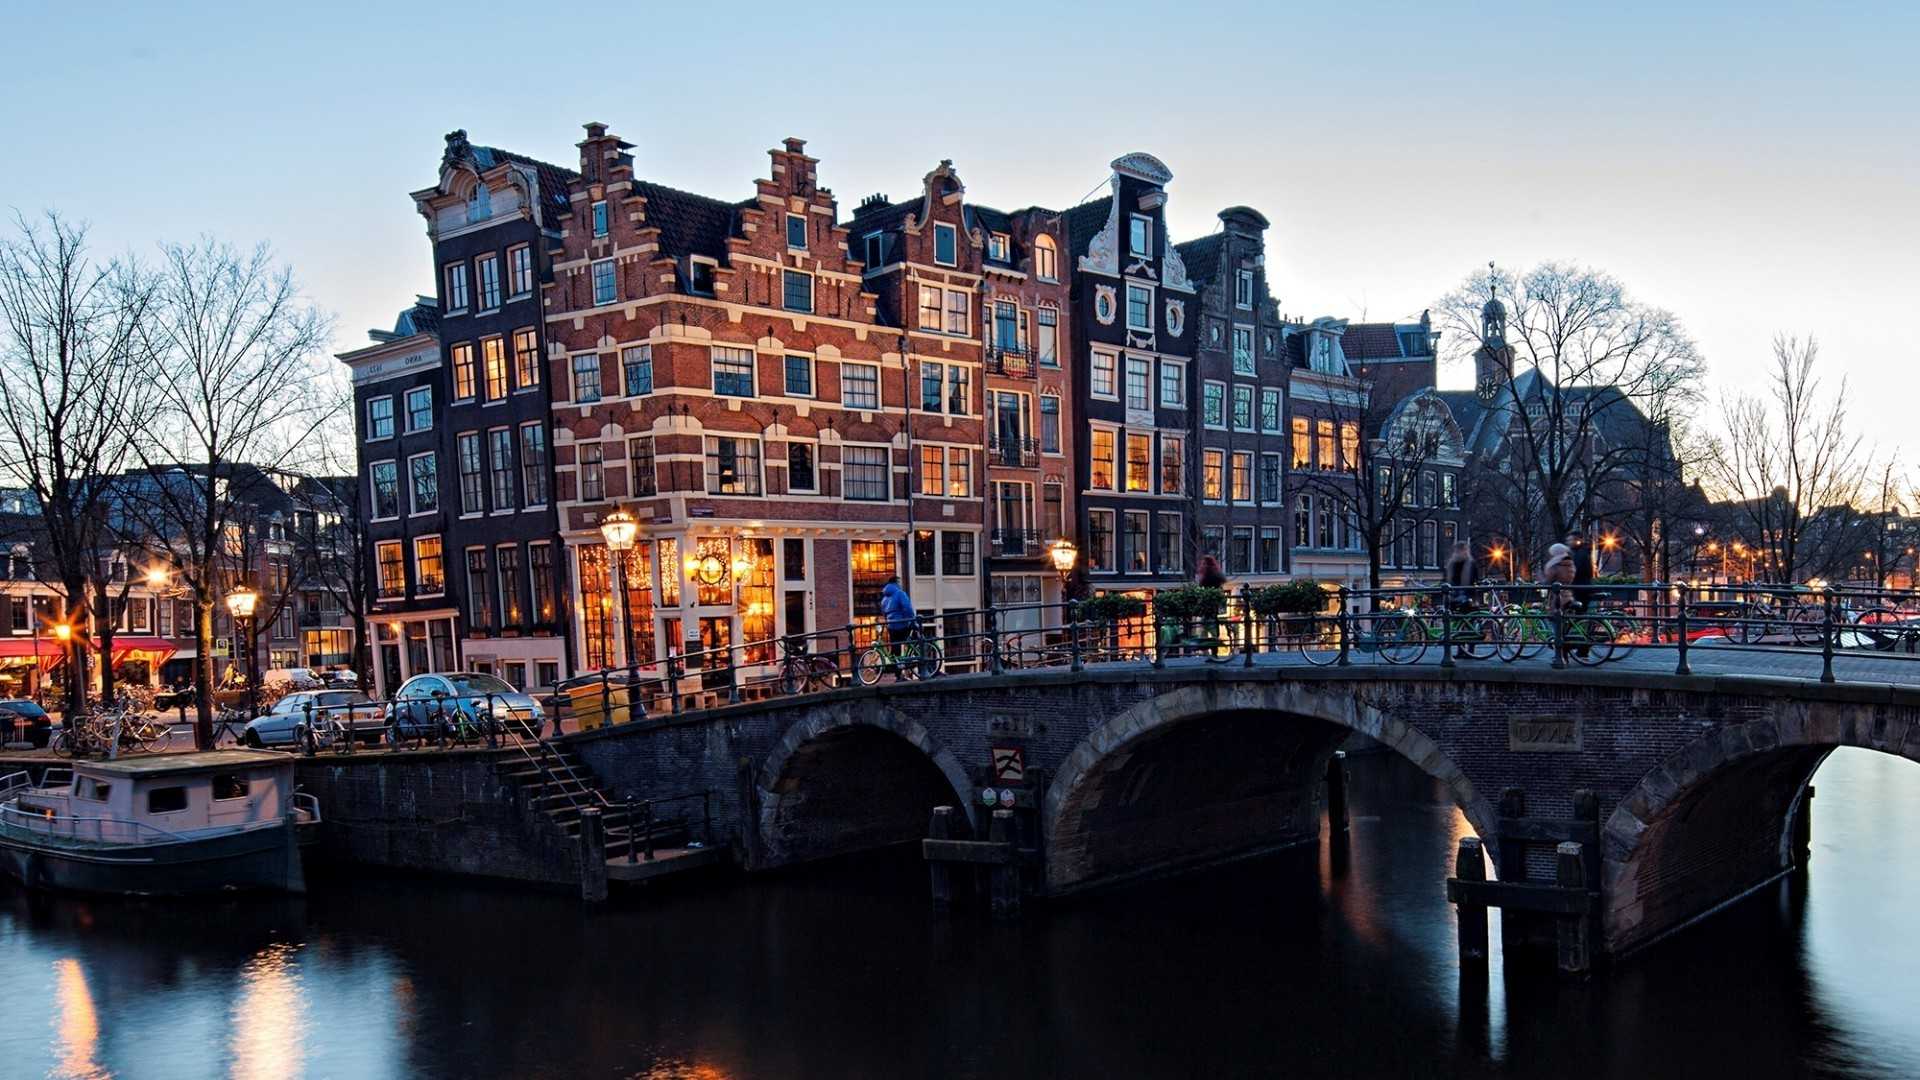 Celebrate Tulip festival in Keukenhof Gardens and stay in Amsterdam for 4 nights 